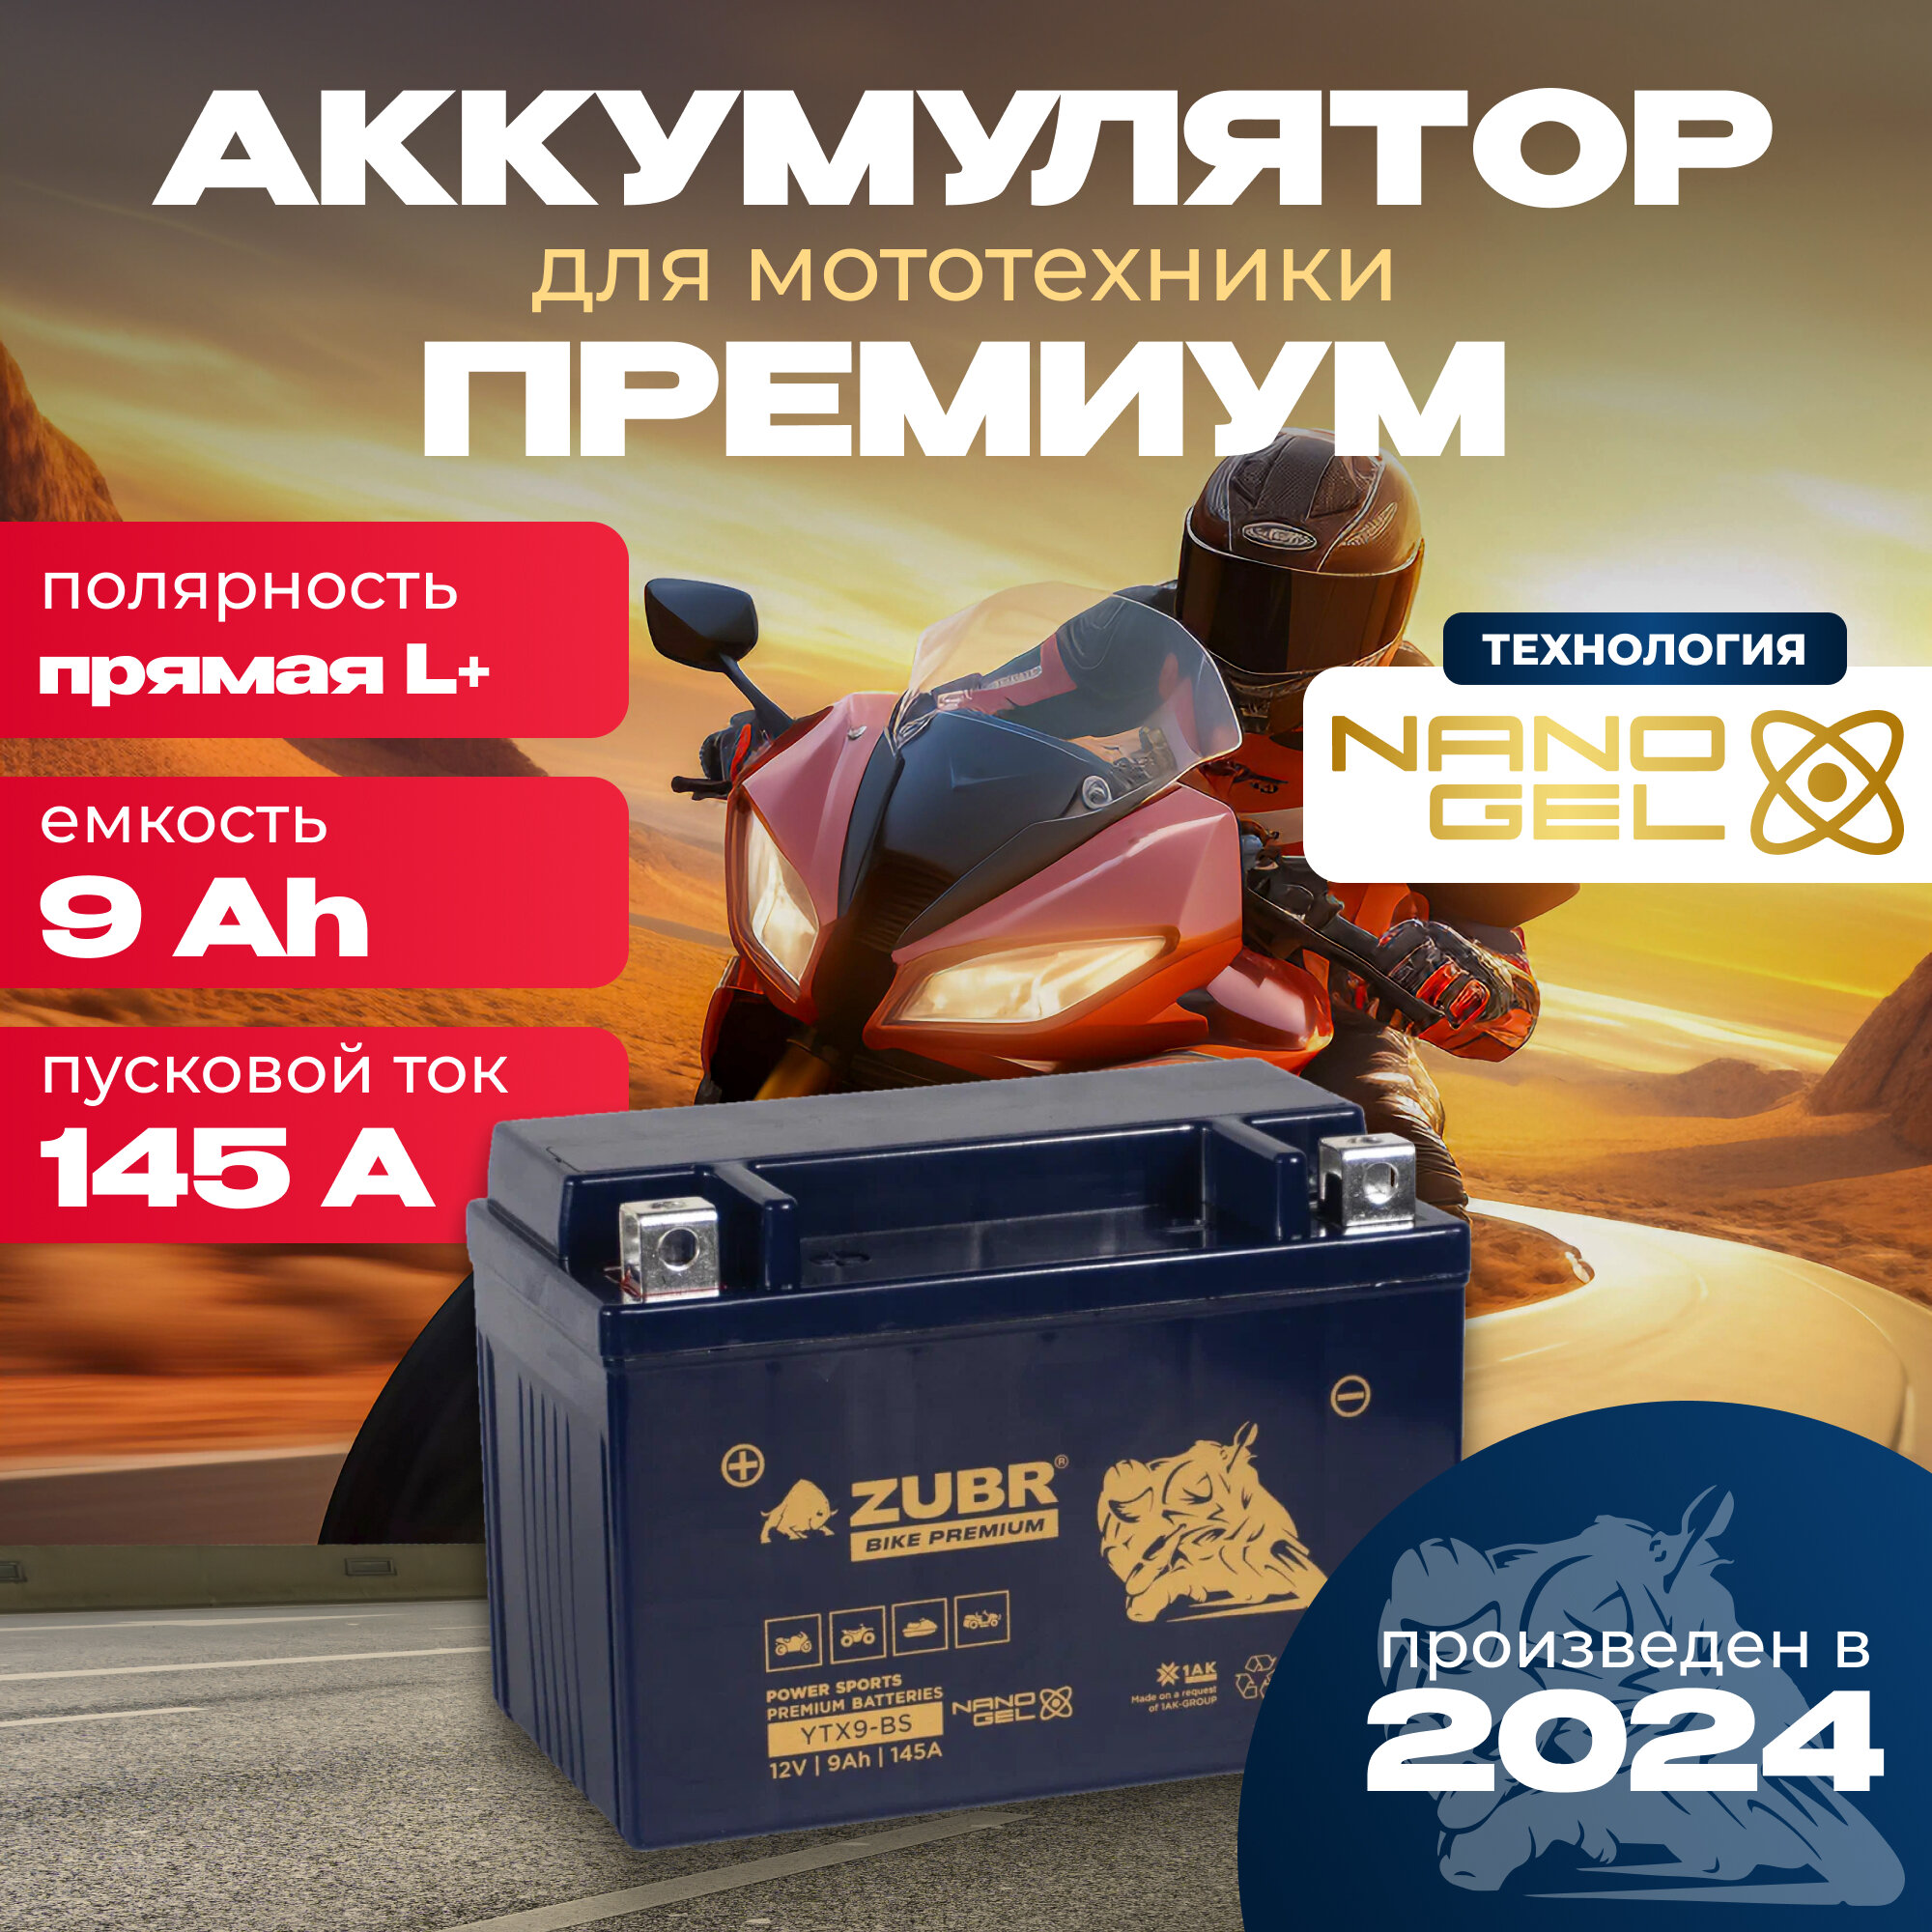 Аккумулятор для мотоцикла 12v ZUBR BIKE PREMIUM YTX9-BS (NANO-GEL) прямая полярность 9 Ah 145 A гелевый, акб на скутер, мопед, квадроцикл 150x86x105 мм